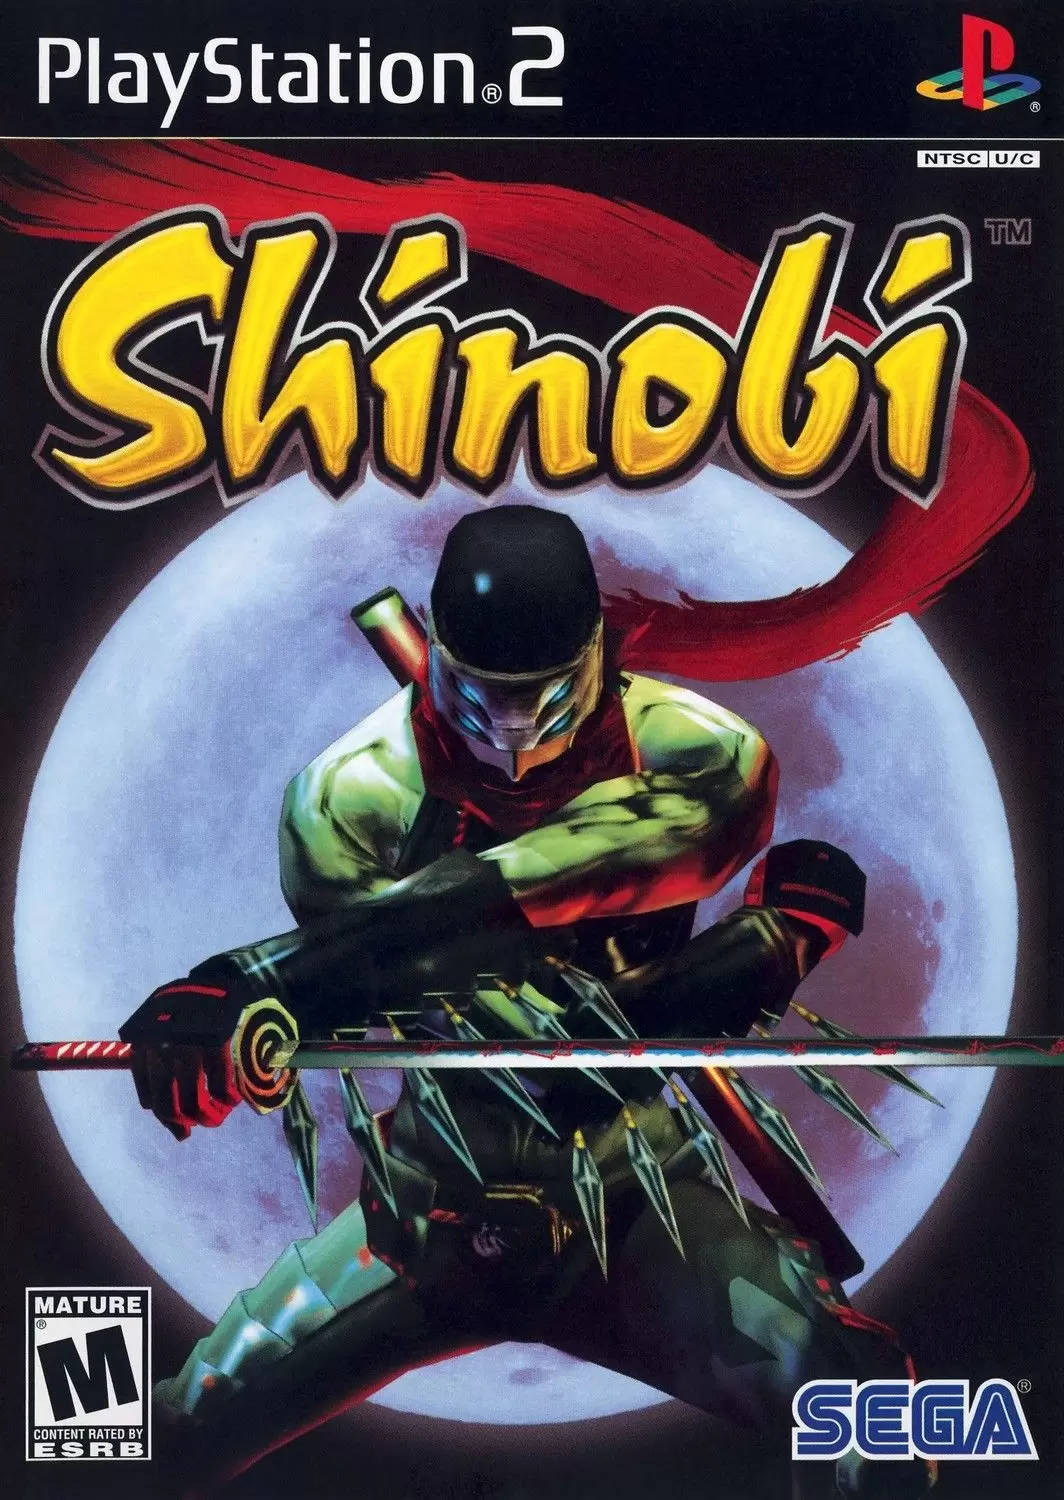 PS2 Games - Shinobi